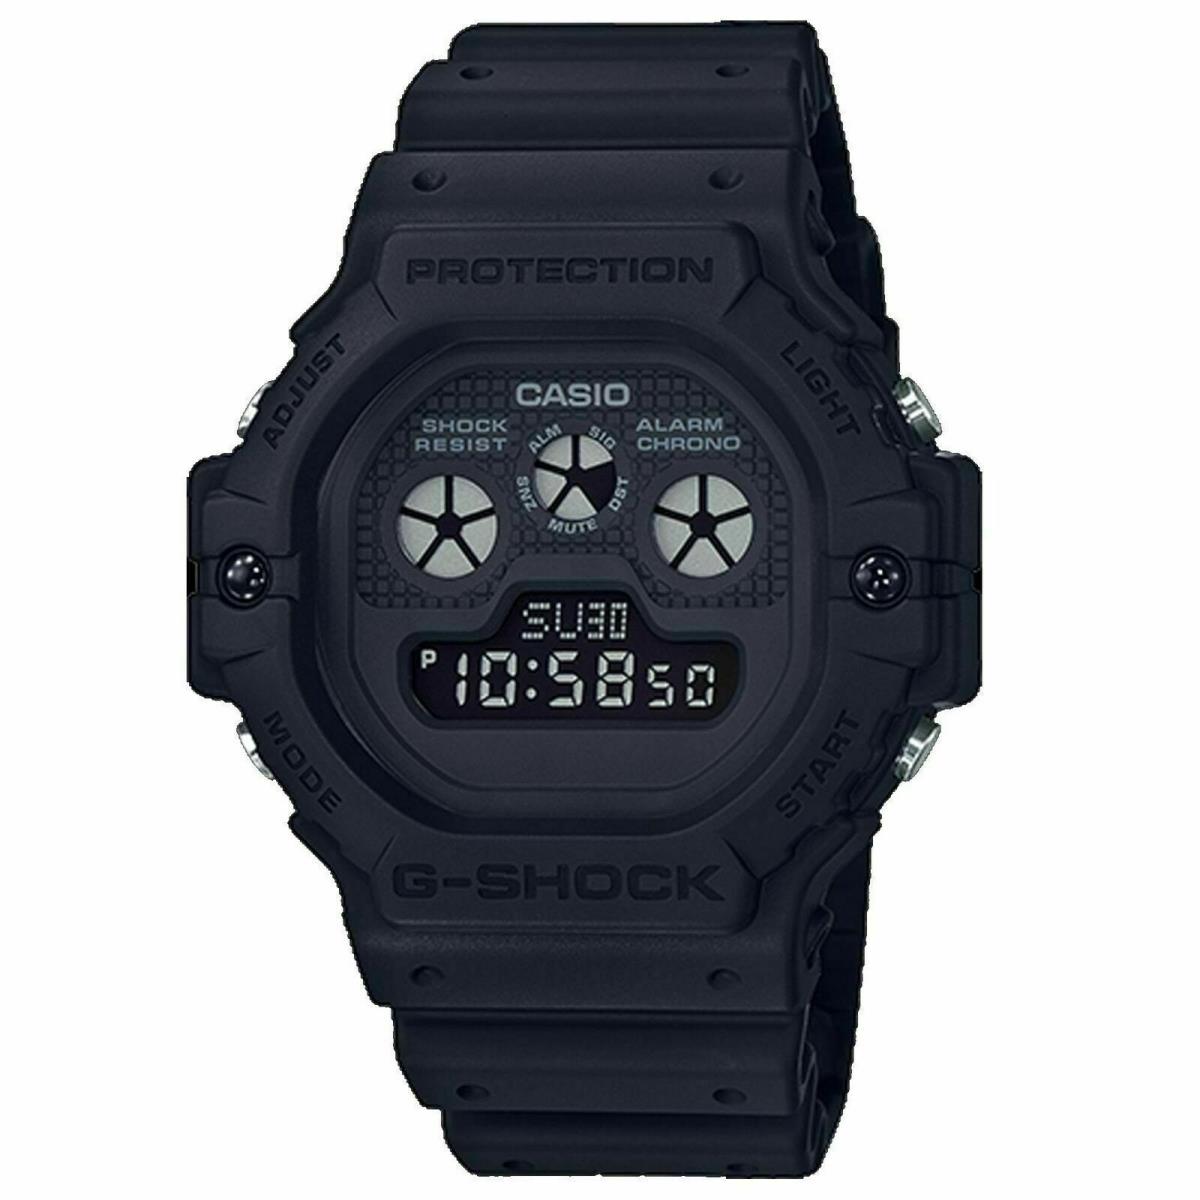 Casio G-shock Water Resistant Black Multifunction Digital Sport Watch DW5900BB-1